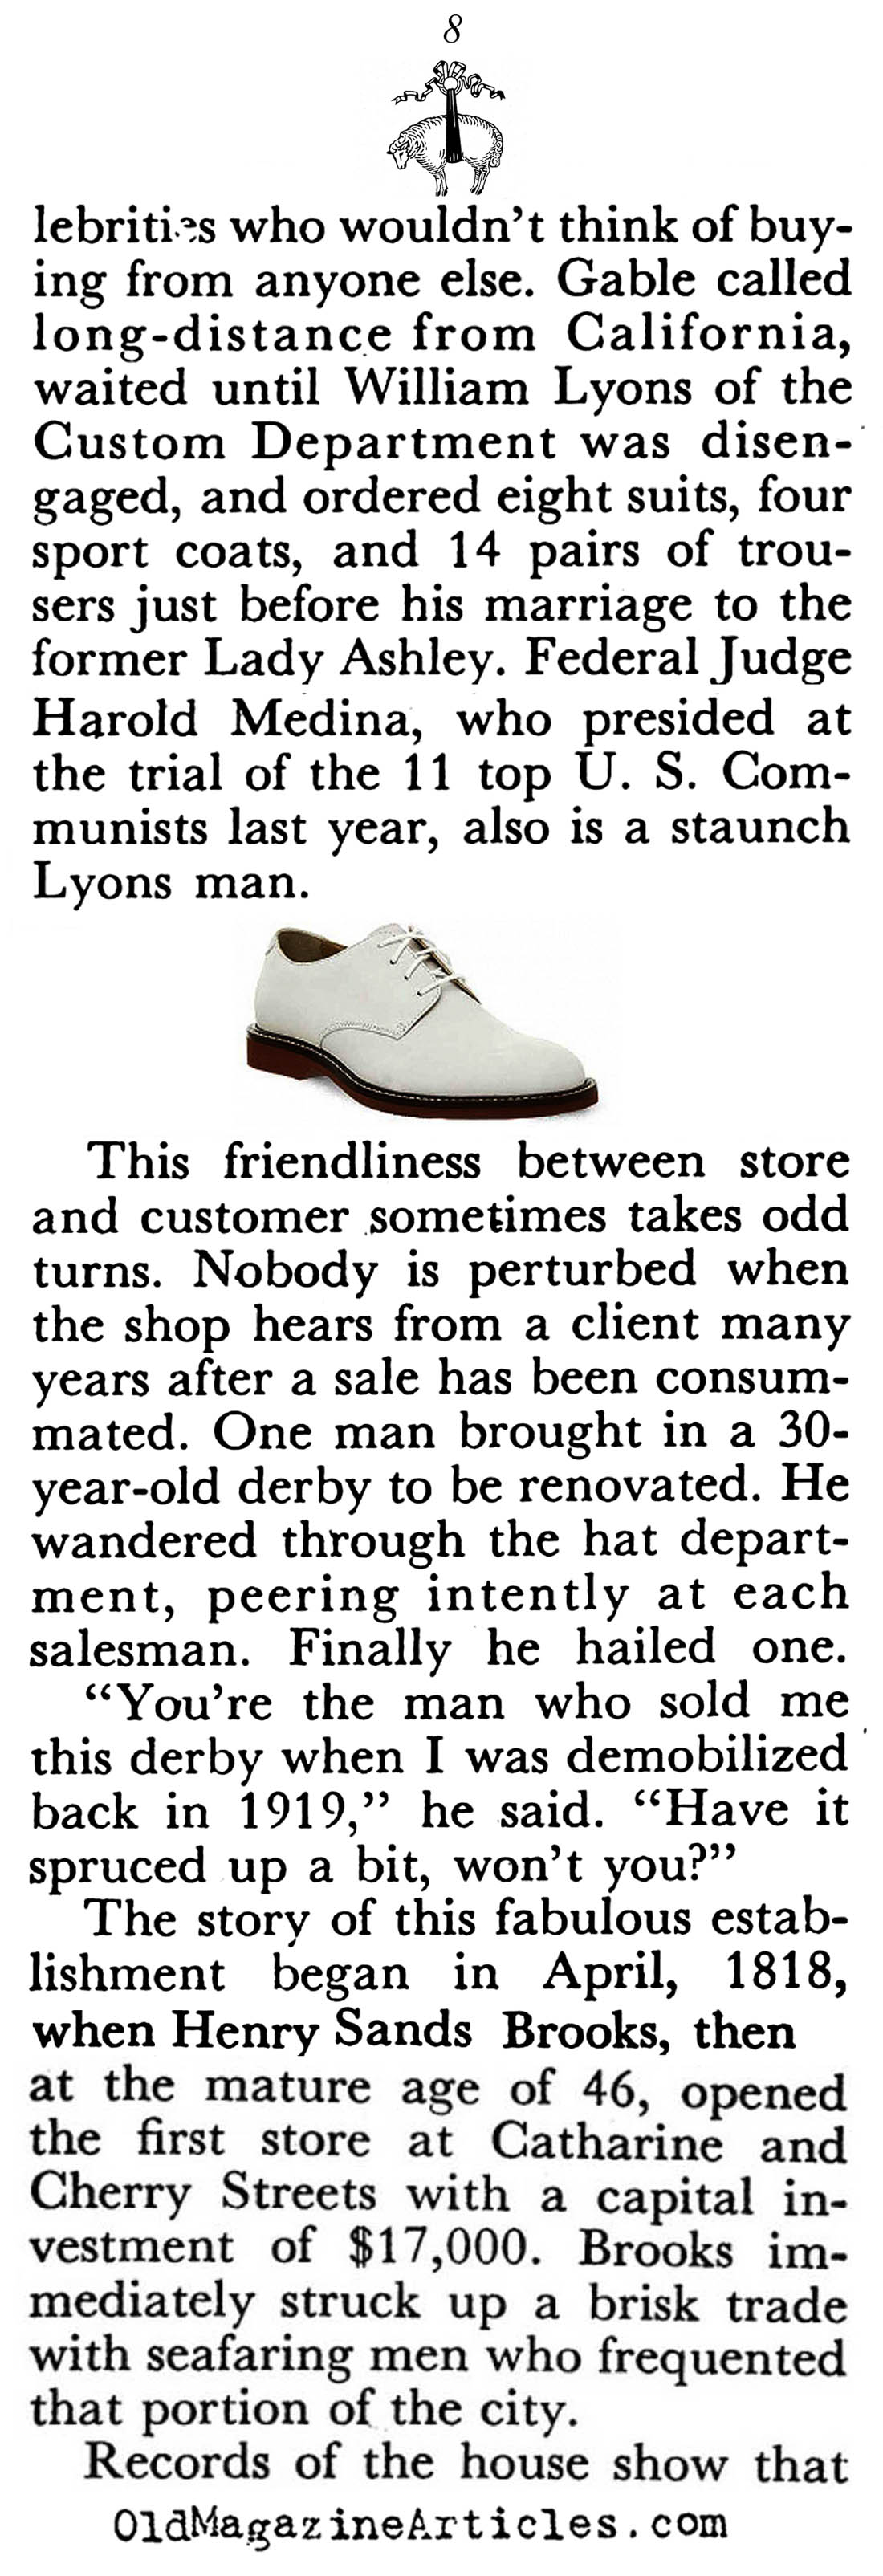 A History of Brooks Brothers (Coronet Magazine, 1950)